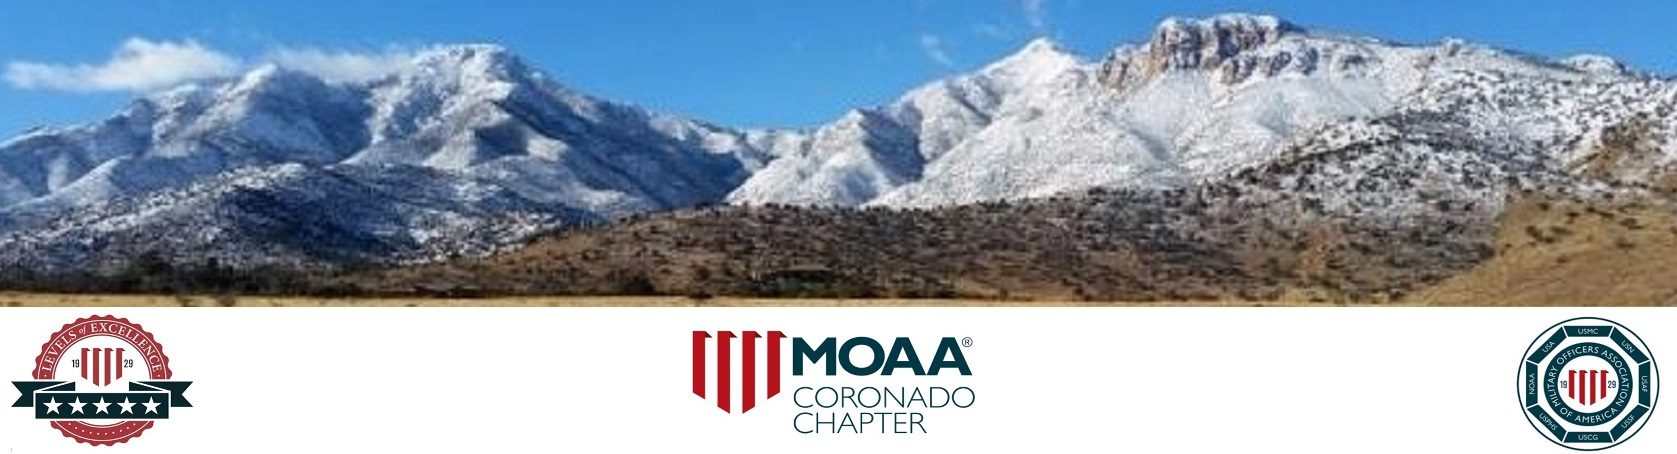 MOAA CORONADO – MOAA 5 STAR LEVEL OF EXCELLENCE AWARD AND 5 STAR COMMUNICATIONS AWARD FOR 2021